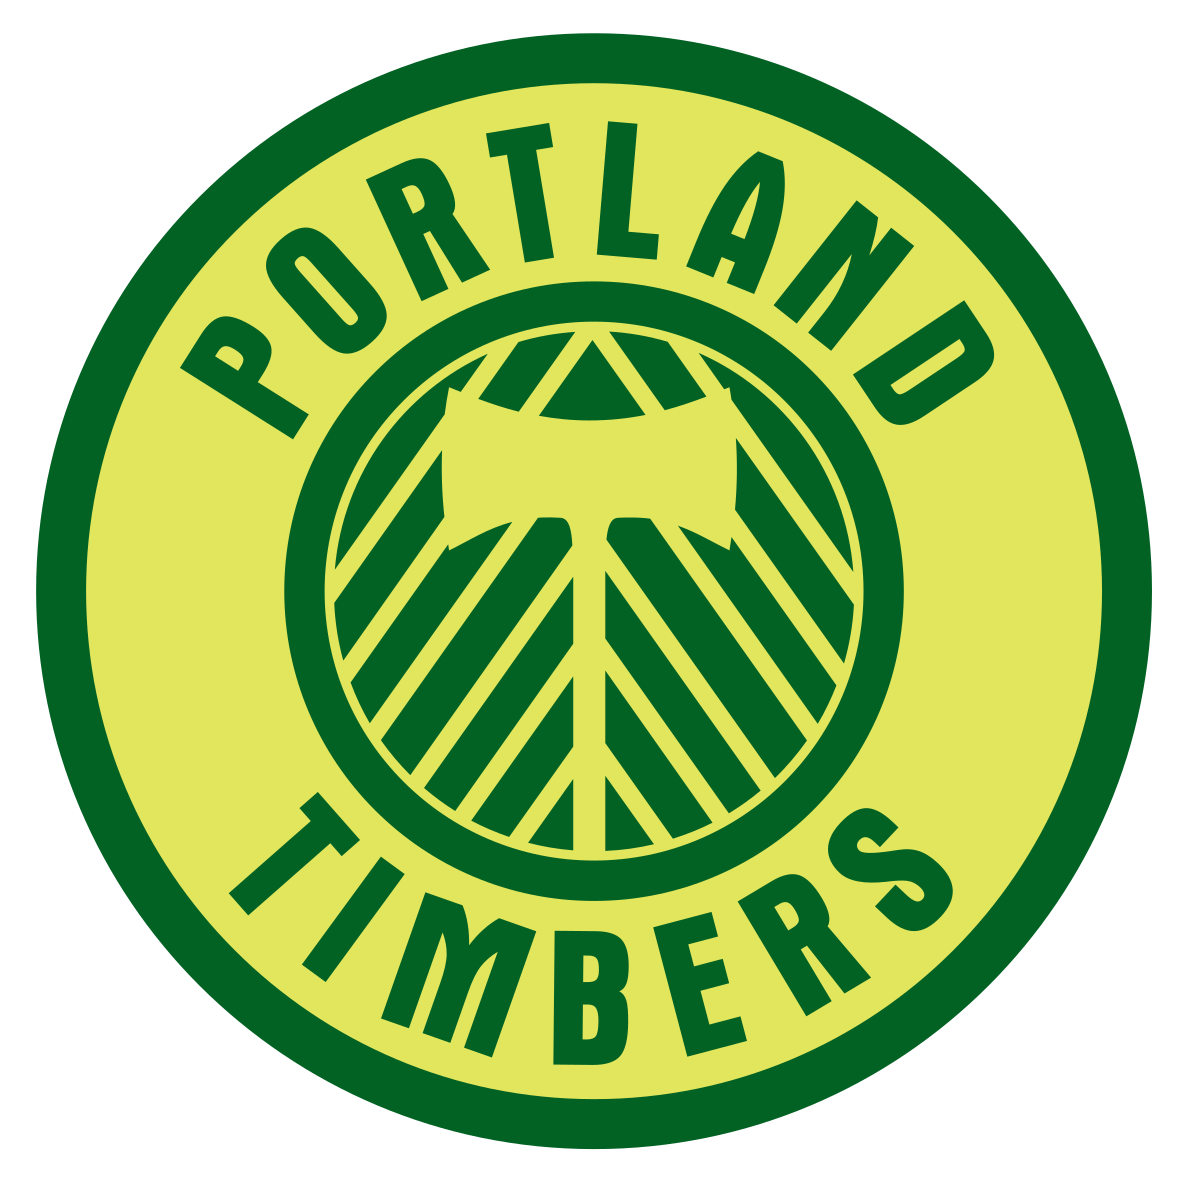 FC Portland Timbers